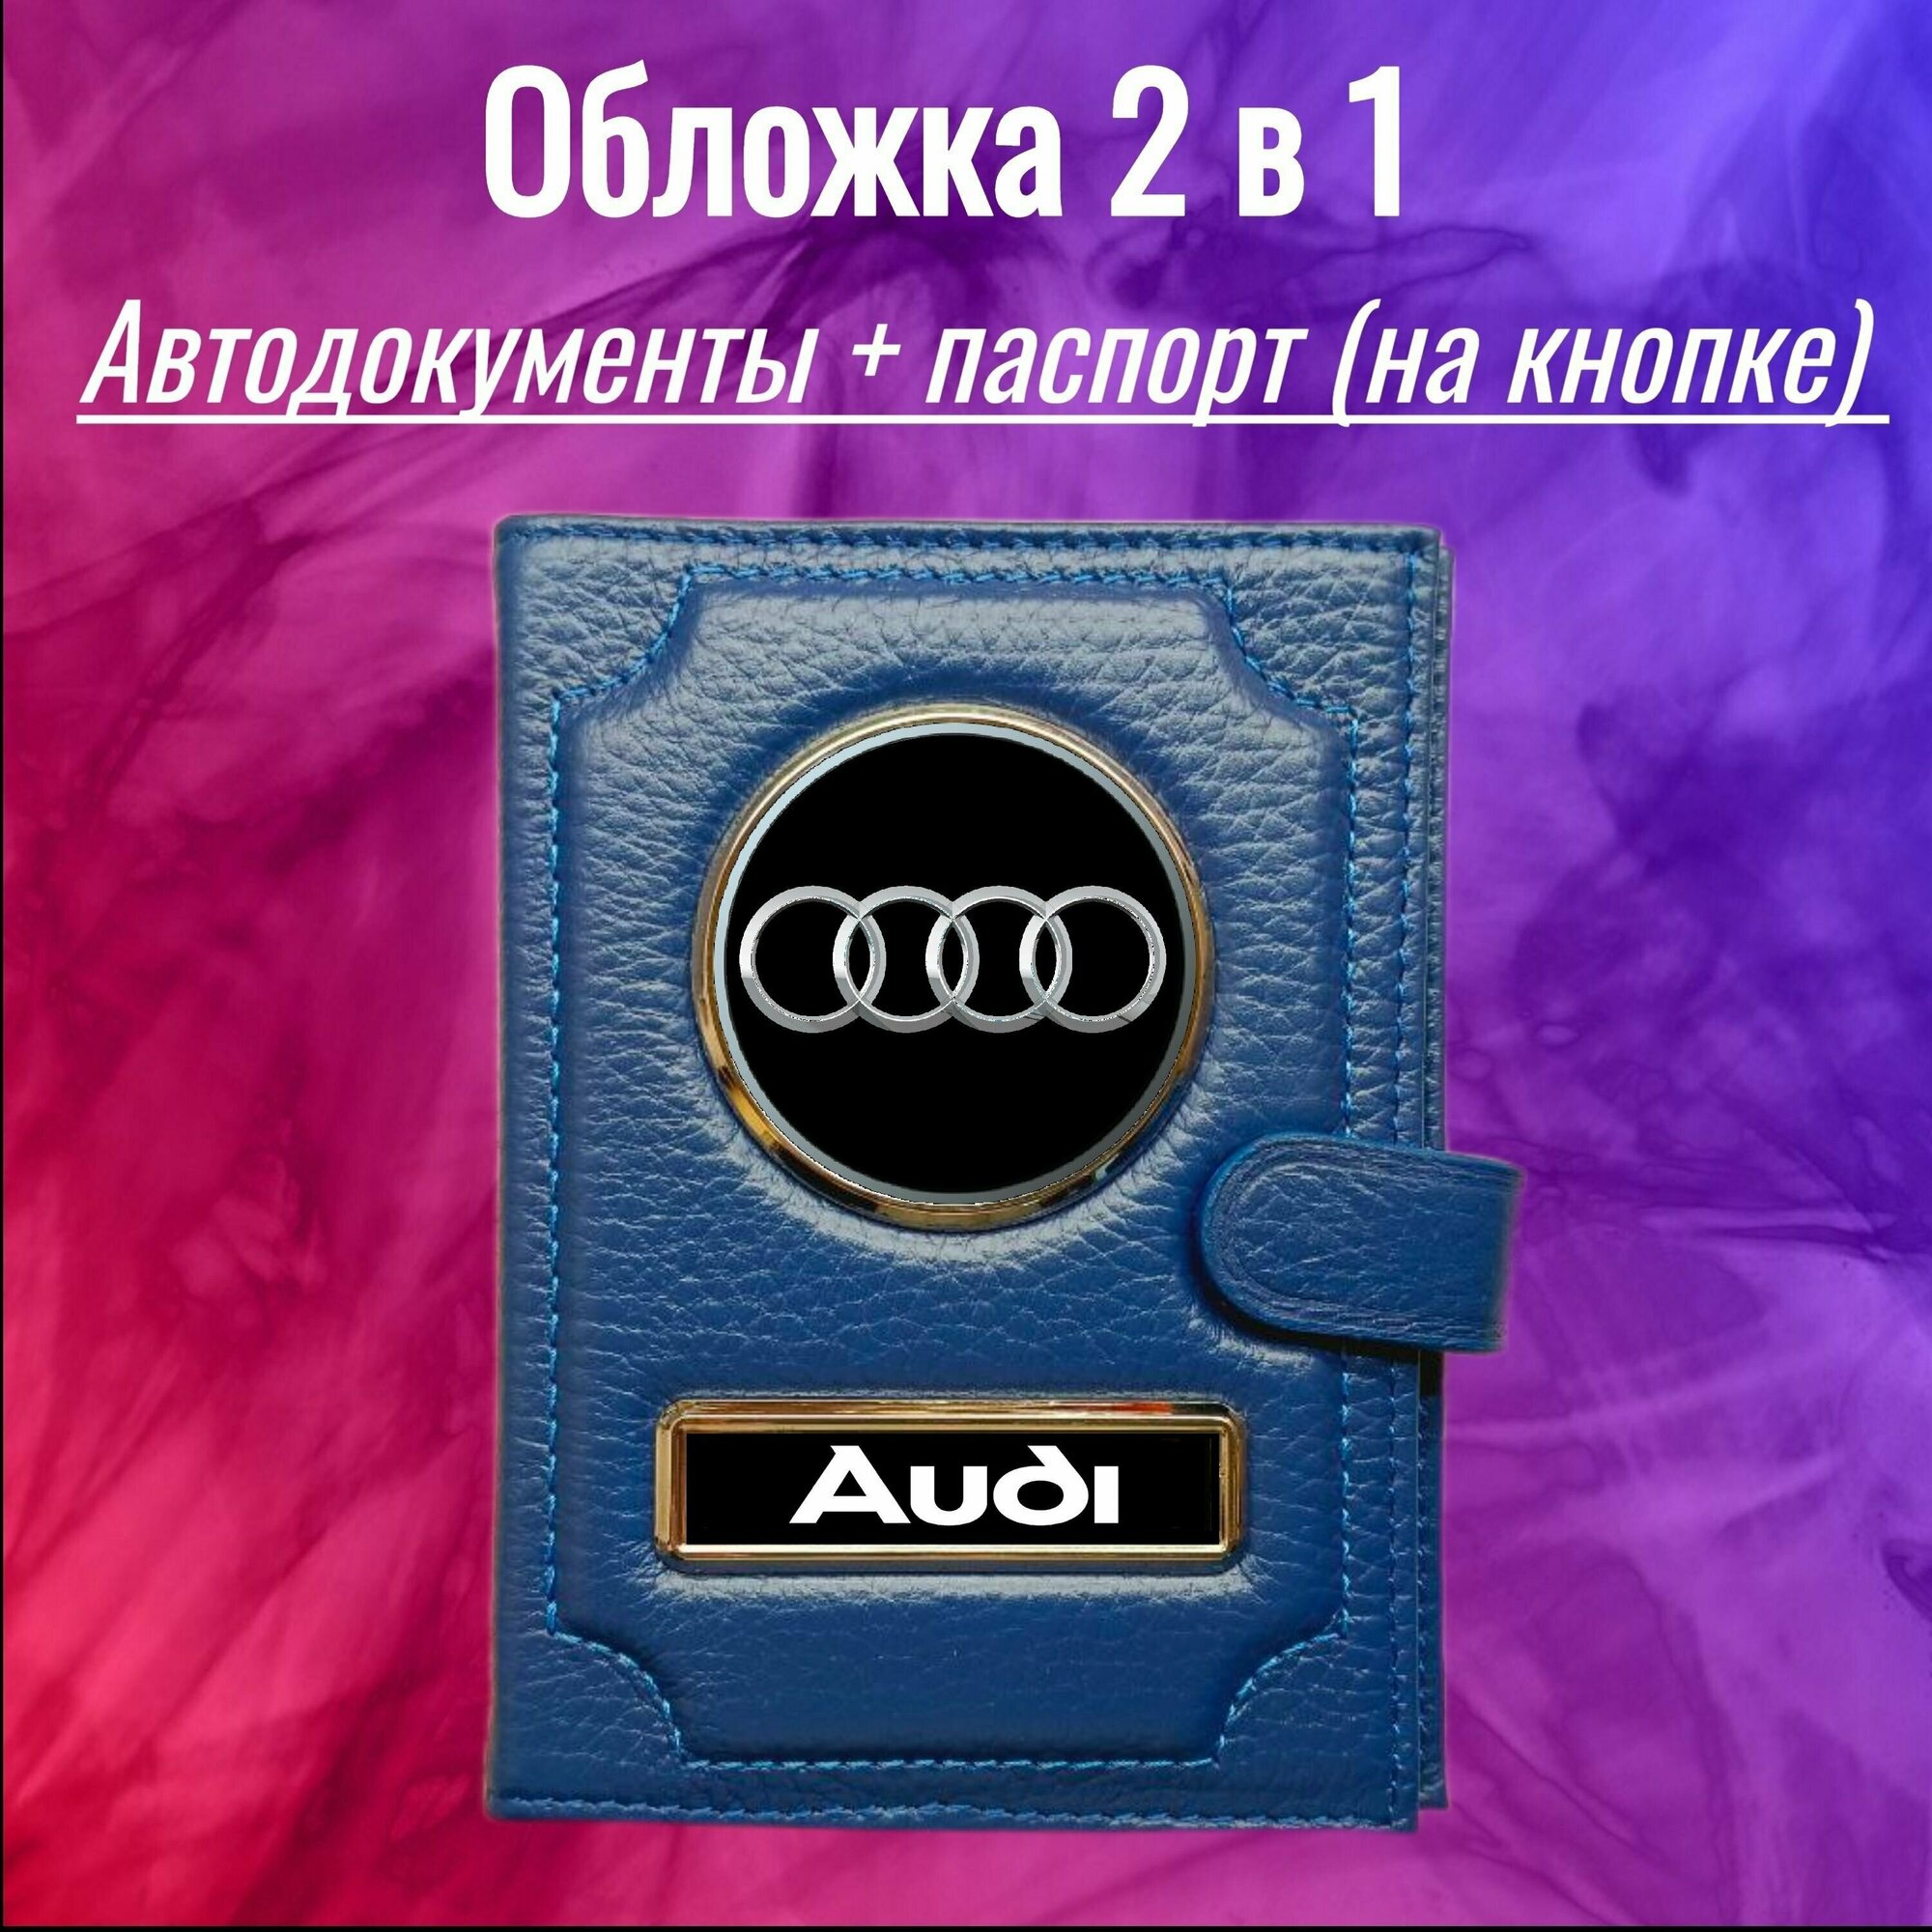 Обложка для автодокументов и паспорта AUDI (Ауди) кожаная флотер A 1 2 3 4 5 6 7 8 А Q3 Q5 Q7 Q8